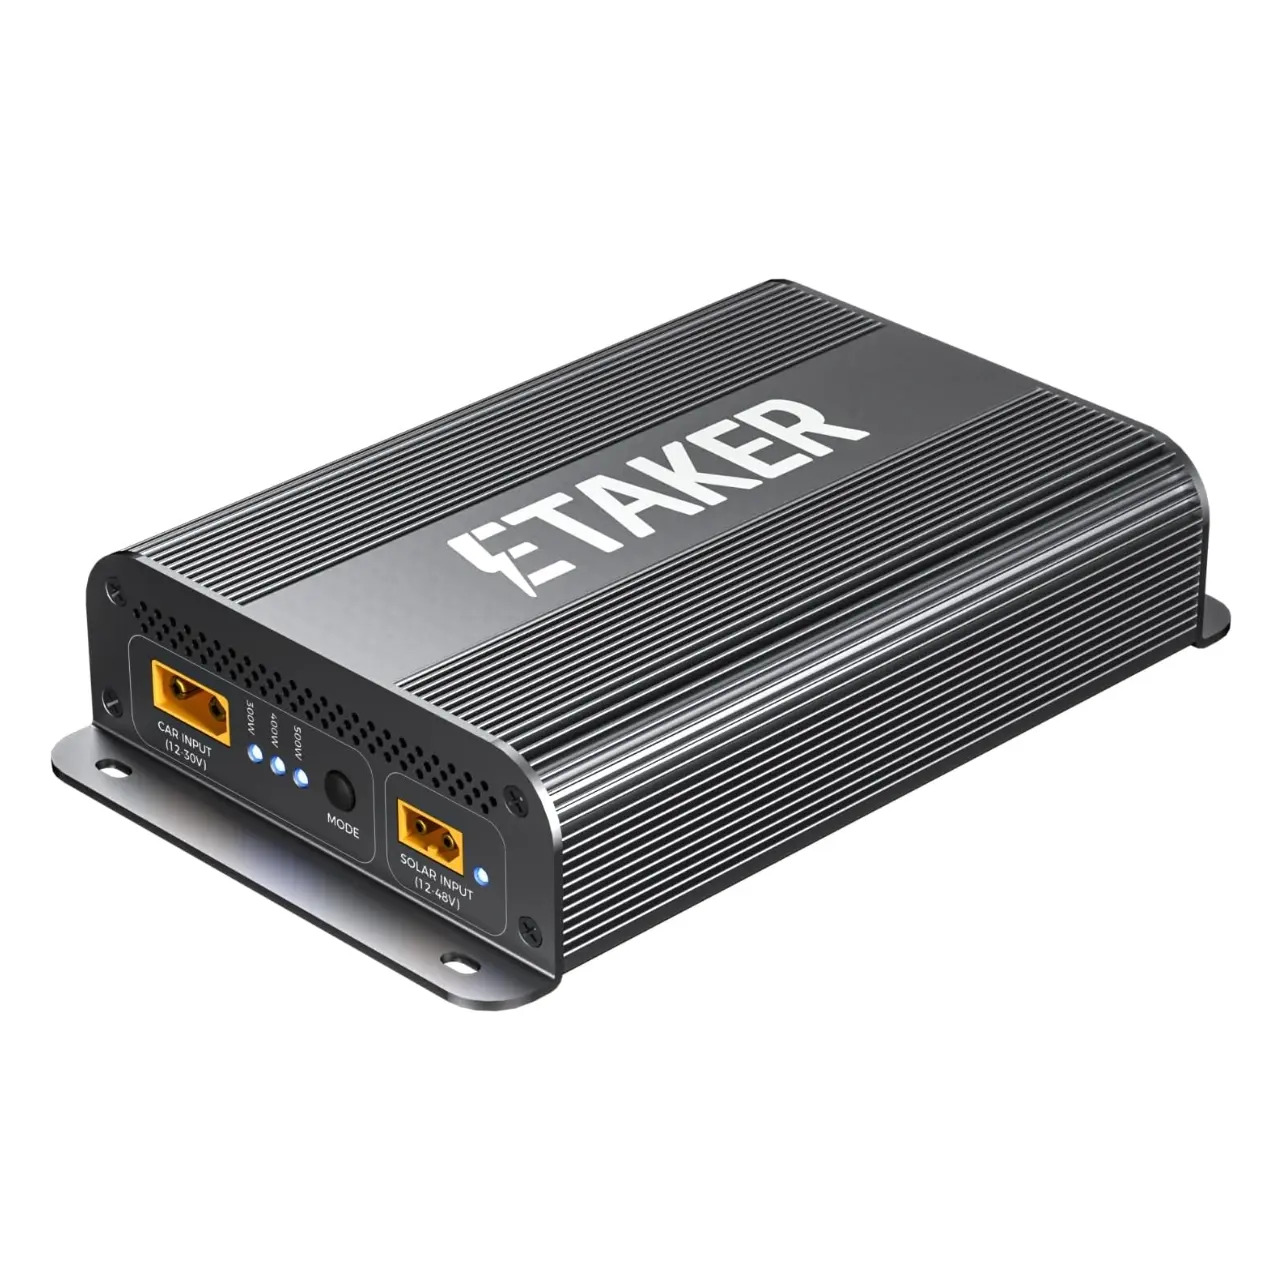 ETAKER Portable Fast Charging Batteries for Gasoline RVs, Diesel Cars